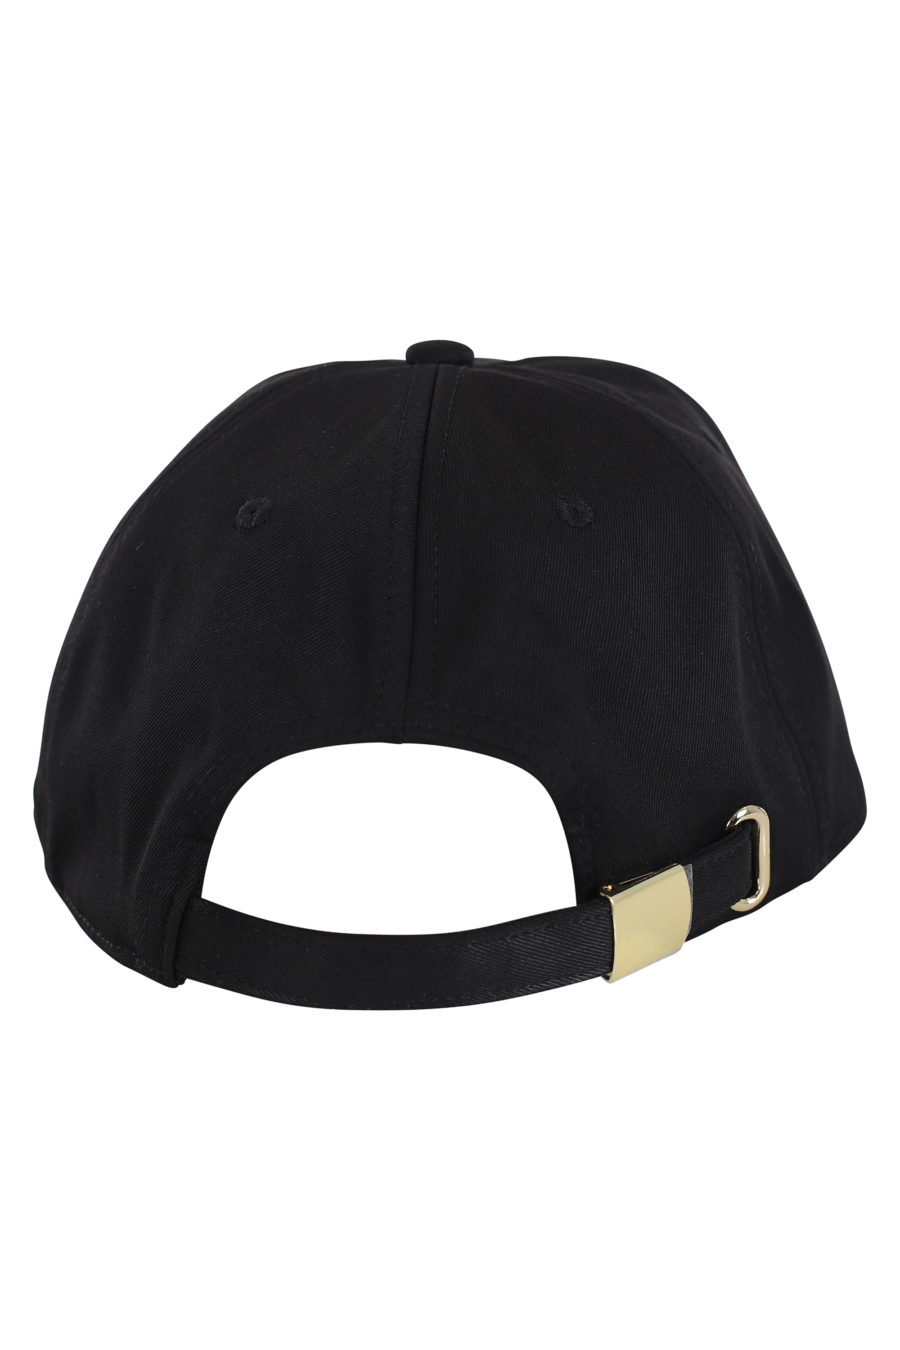 Black cap with round gold logo - IMG 0140